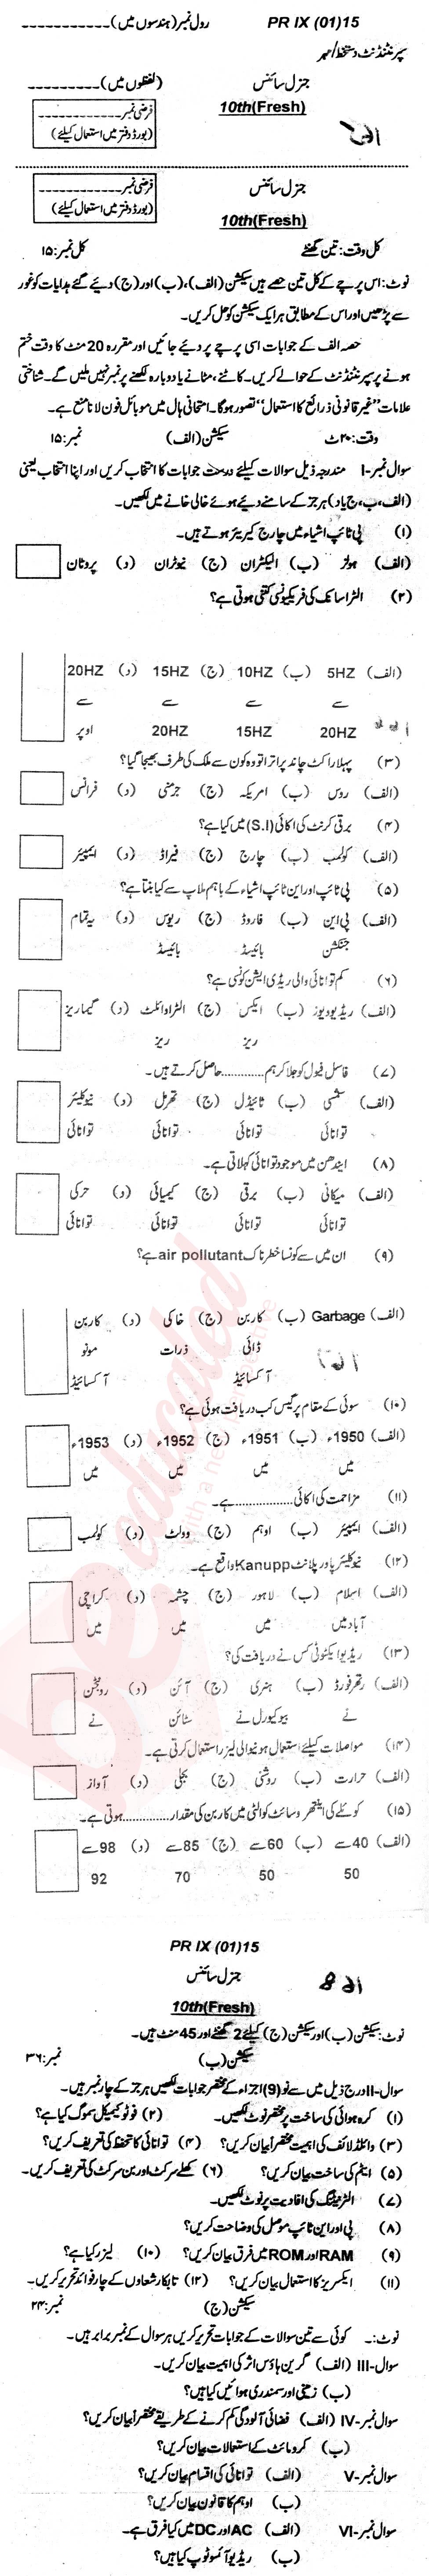 General Science 10th Urdu Medium Past Paper Group 1 BISE Mardan 2015